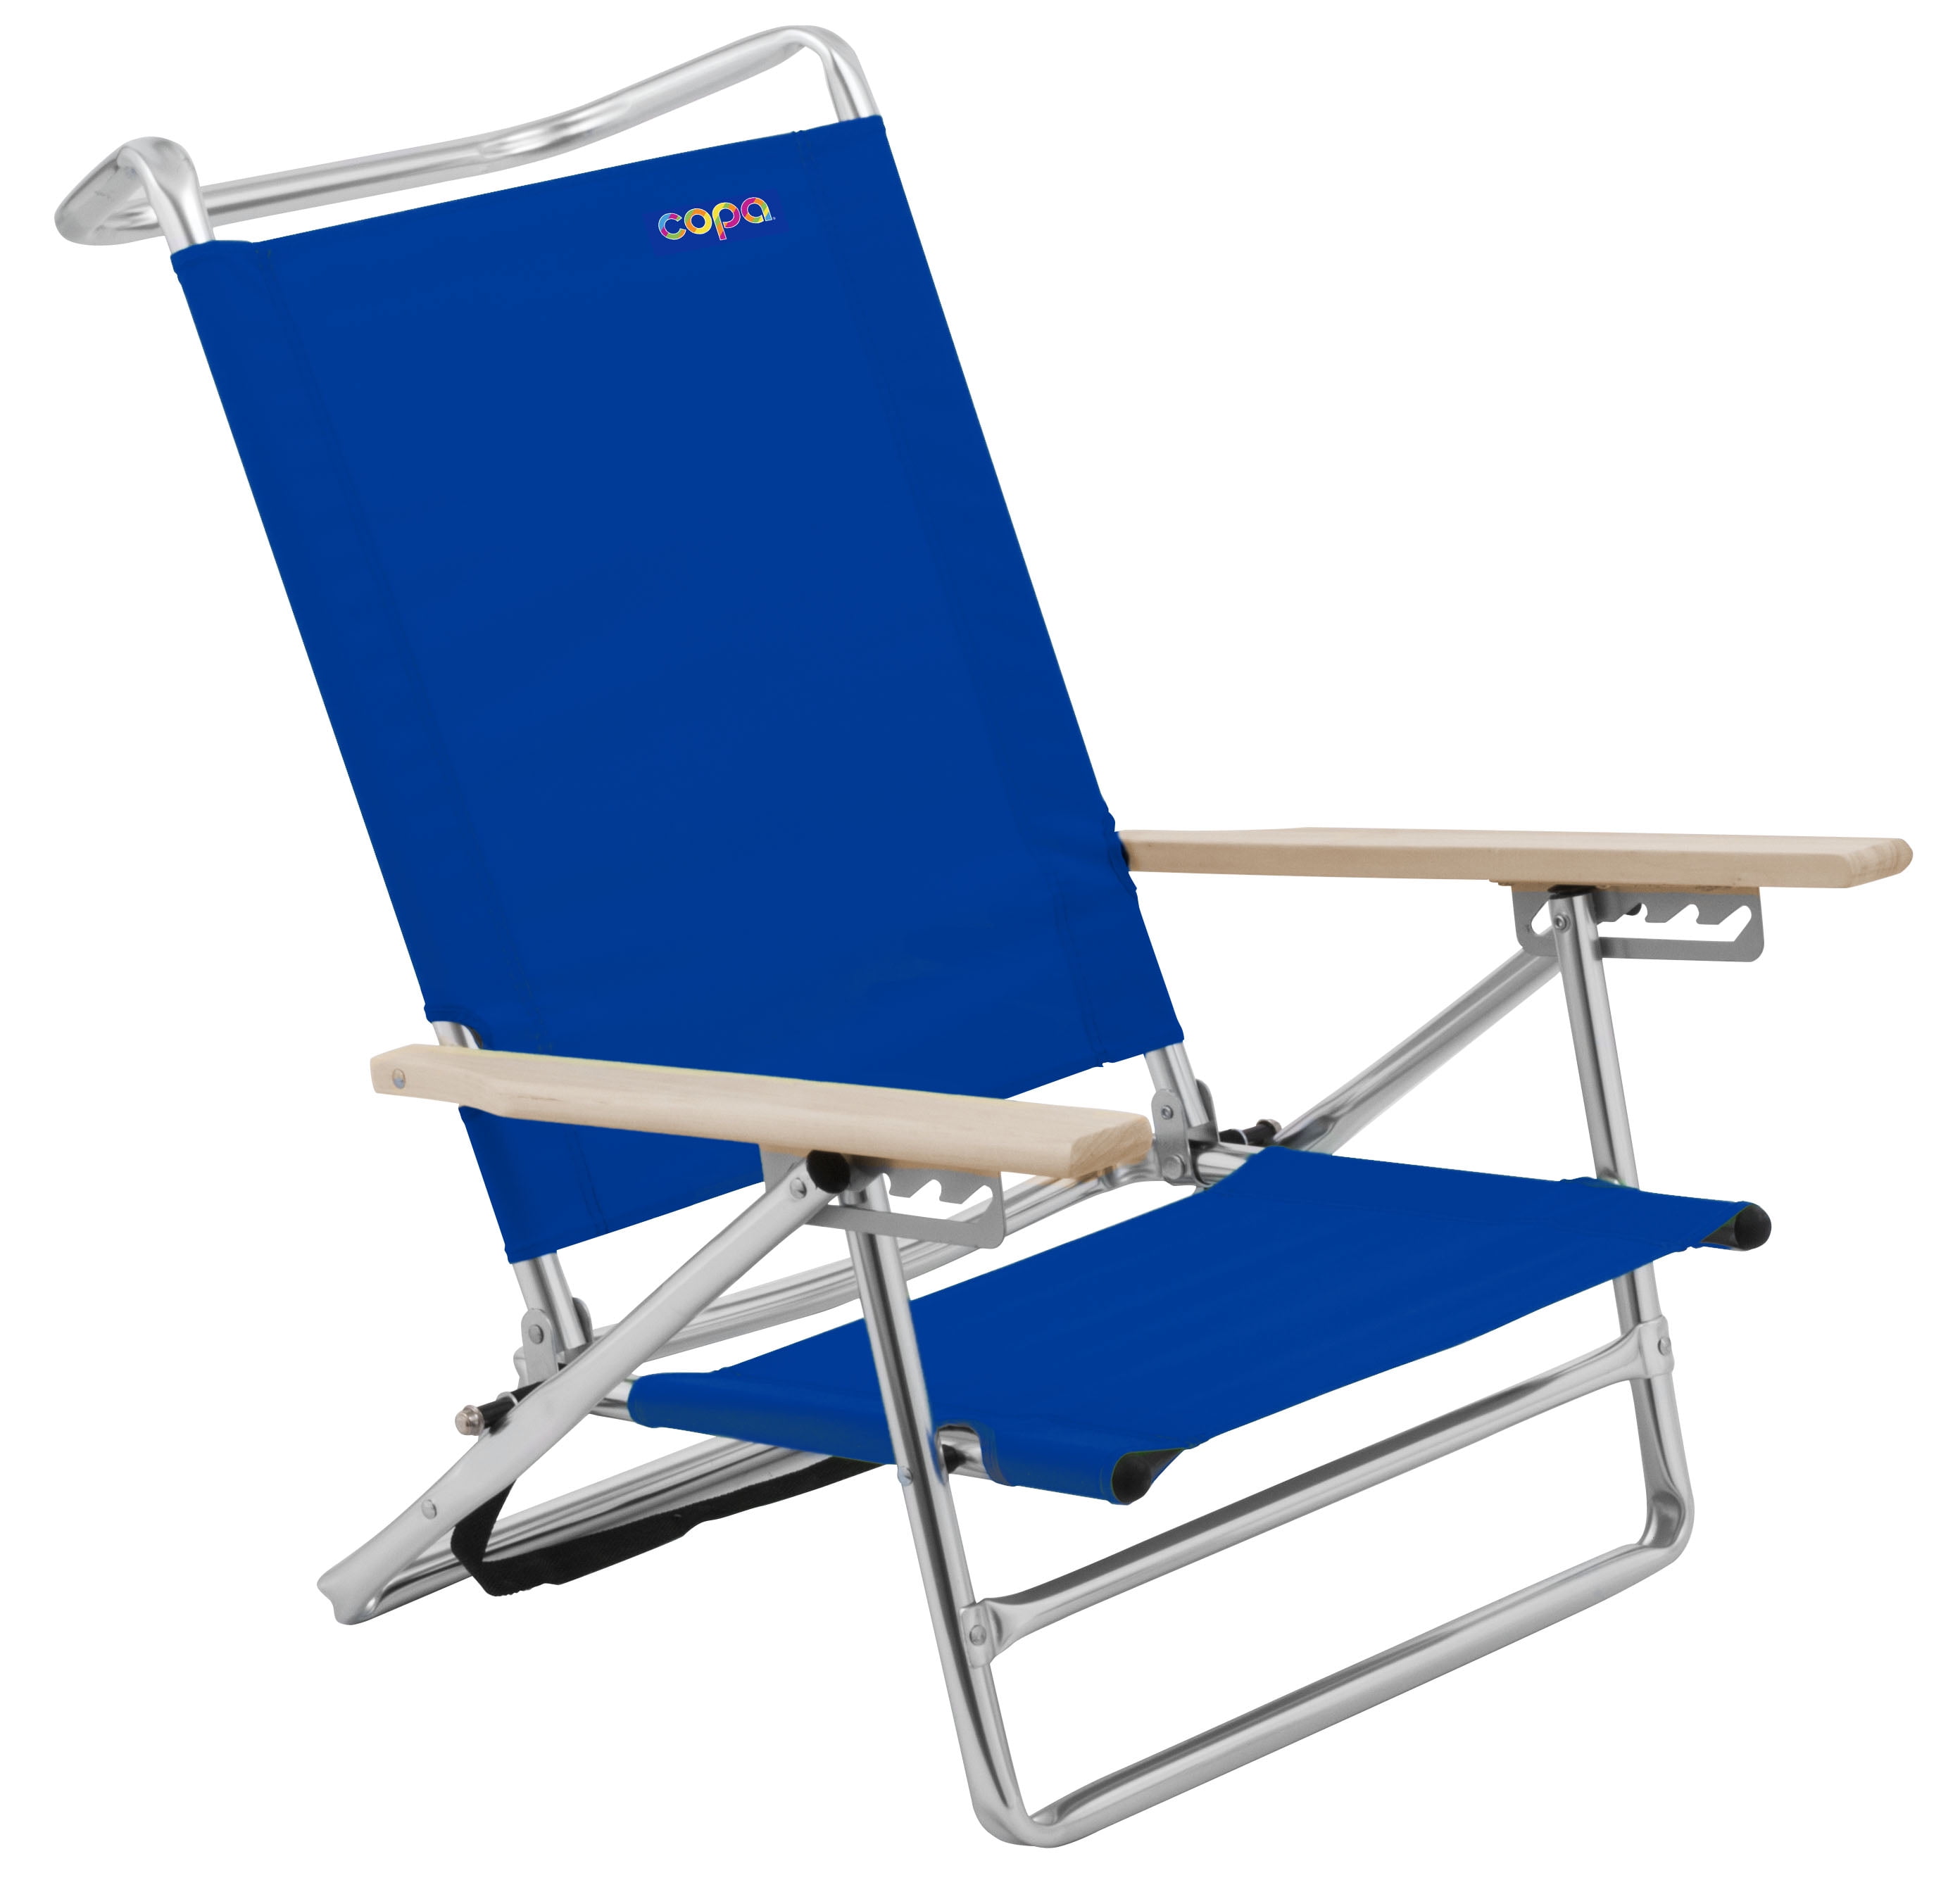 Unique Copa Beach Chair Walmart for Simple Design